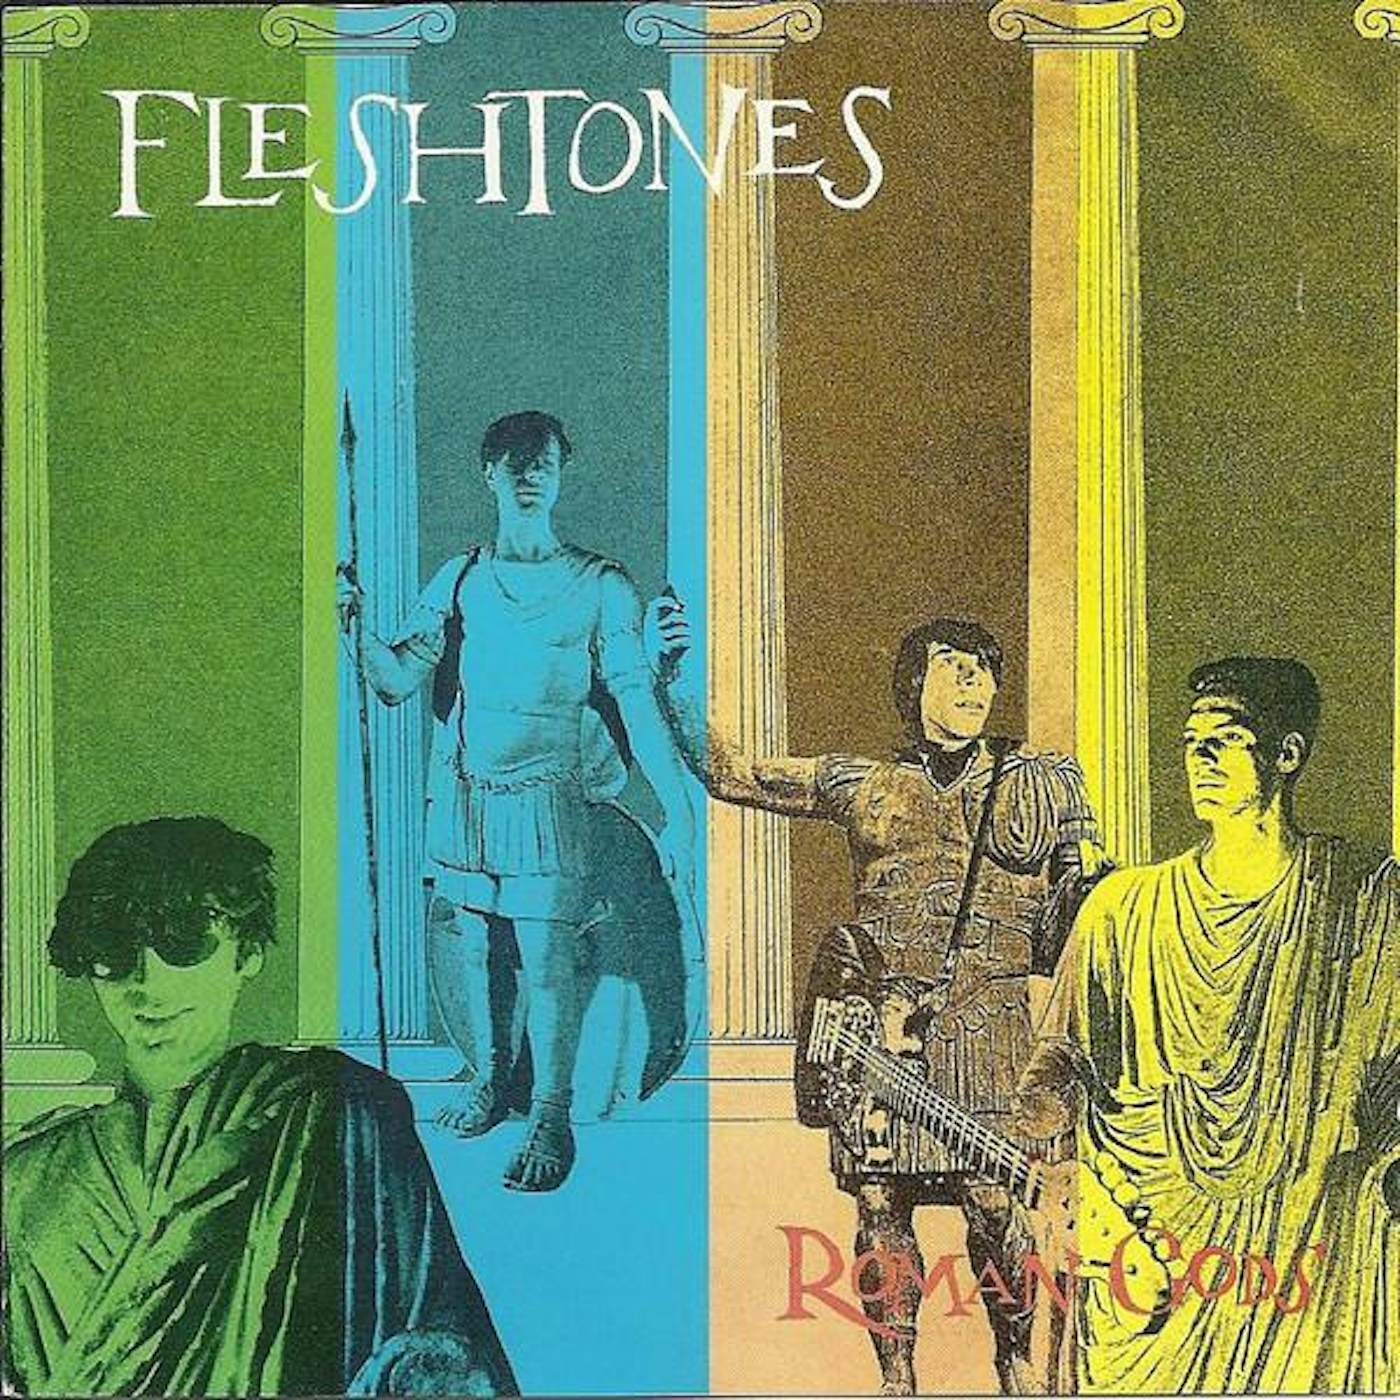 The Fleshtones ROMAN GODS CD